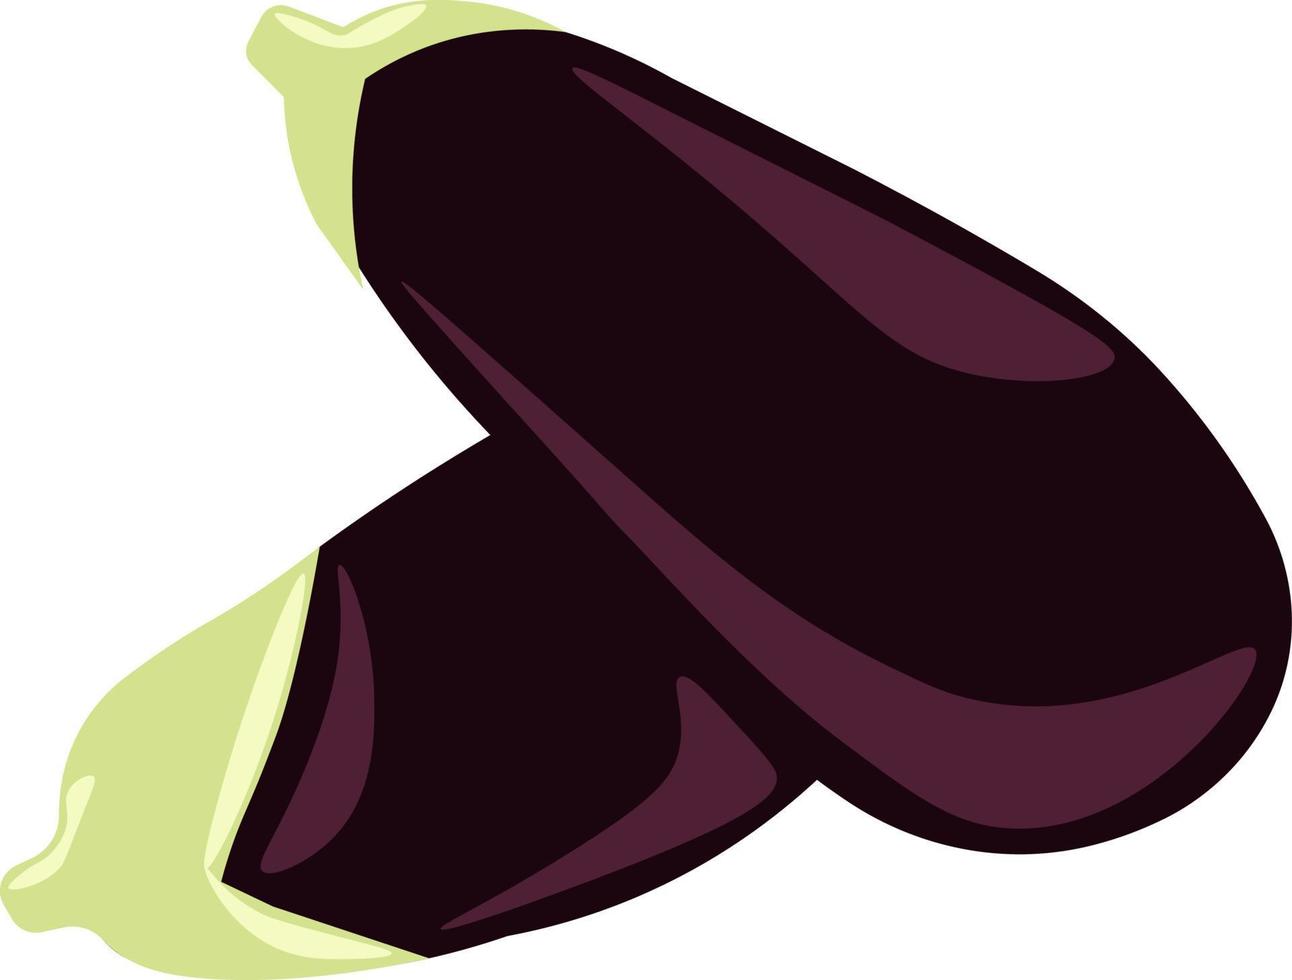 Eggplant, illustration, vector on white background.